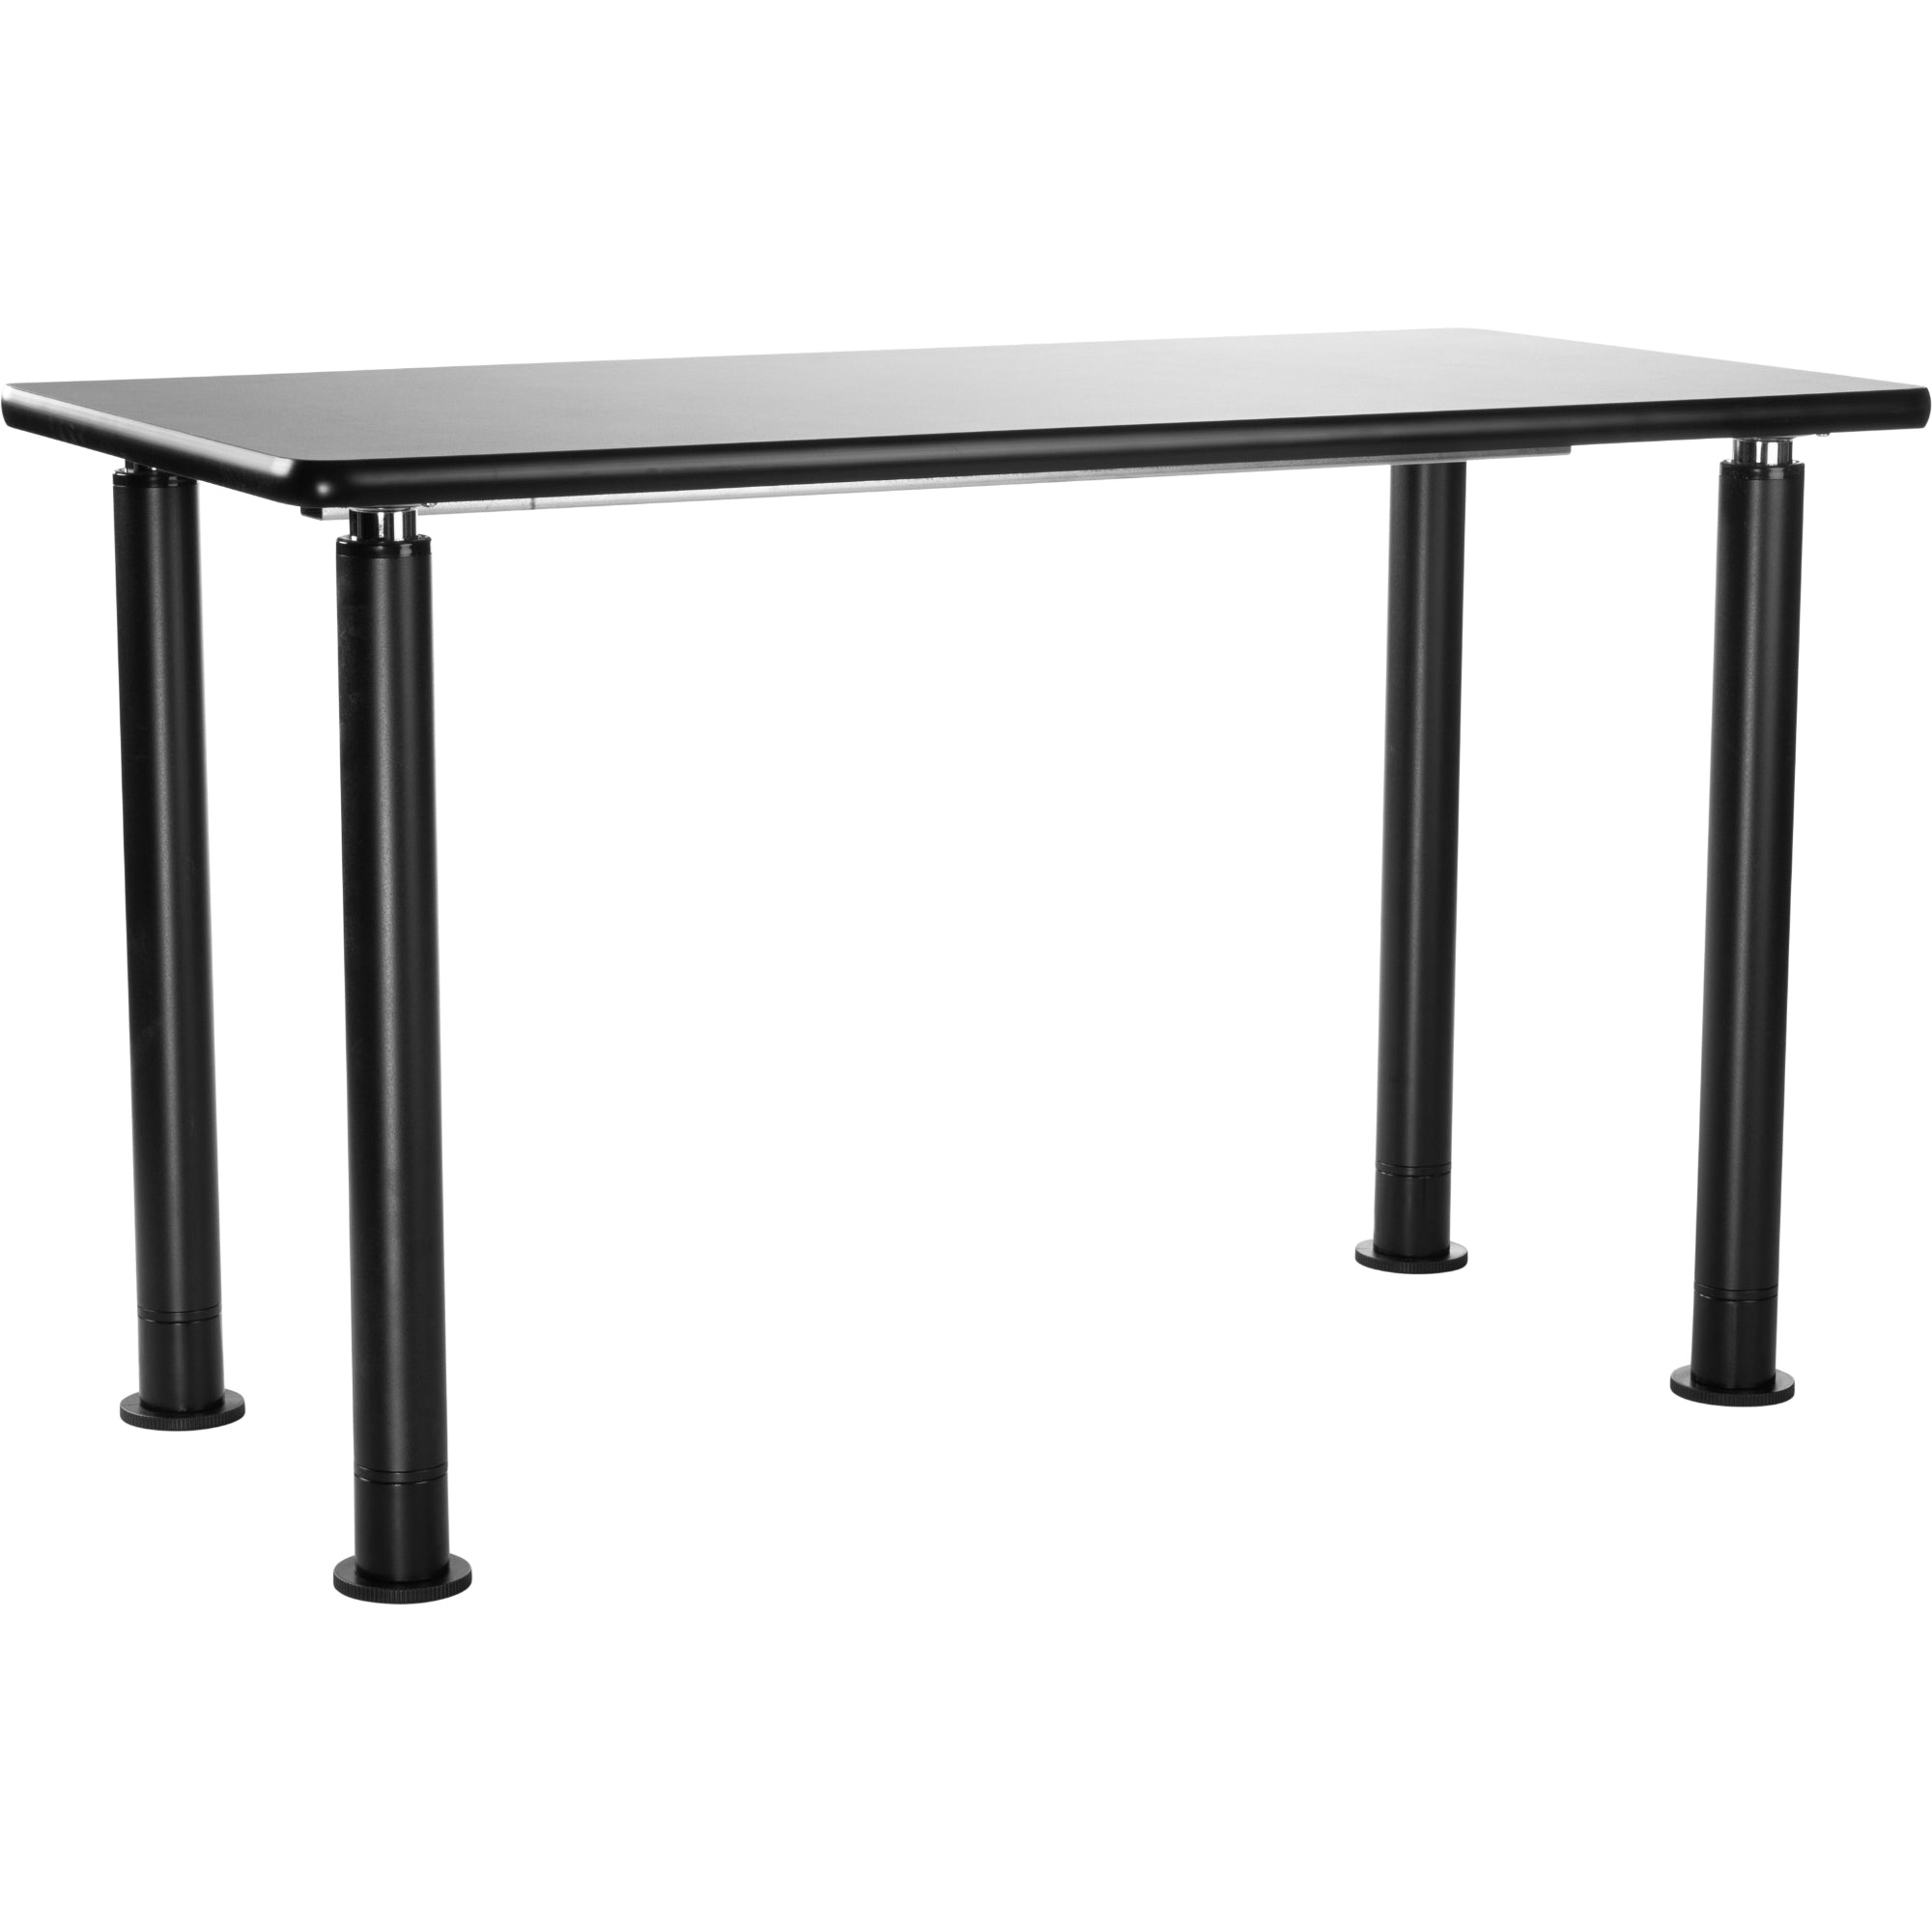 Designer Series Adjustable Height Science Table, 30" x 60" x 27"-42" H, High Pressure Laminate Top